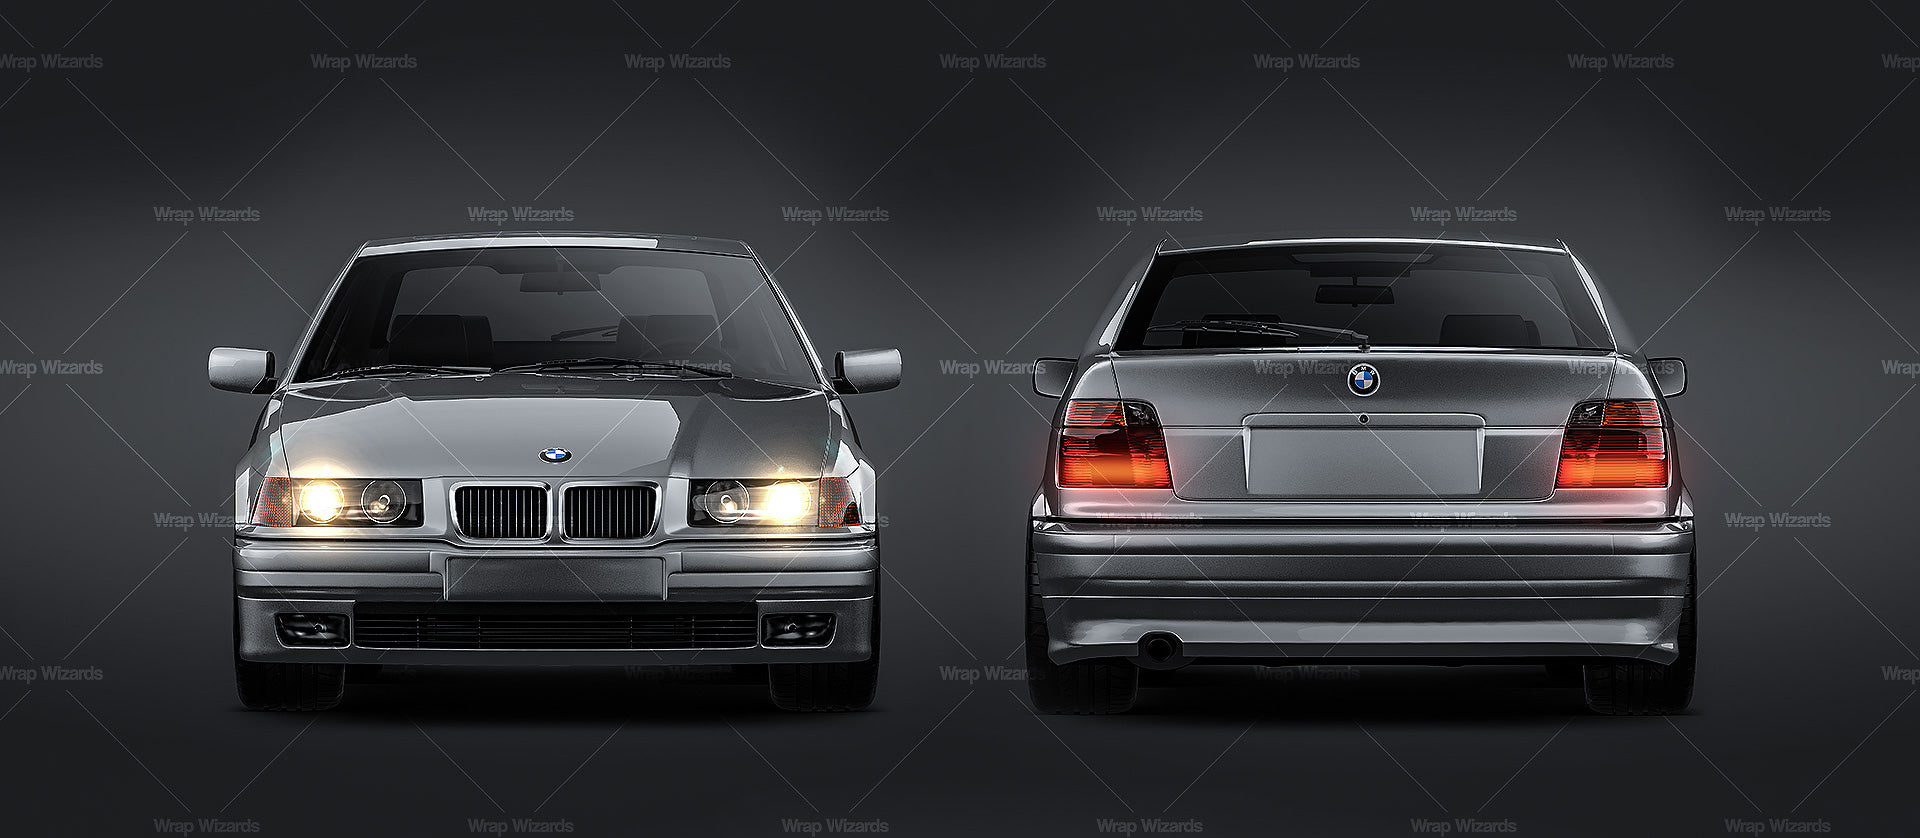 BMW 3-Series E36 compact - Car Mockup